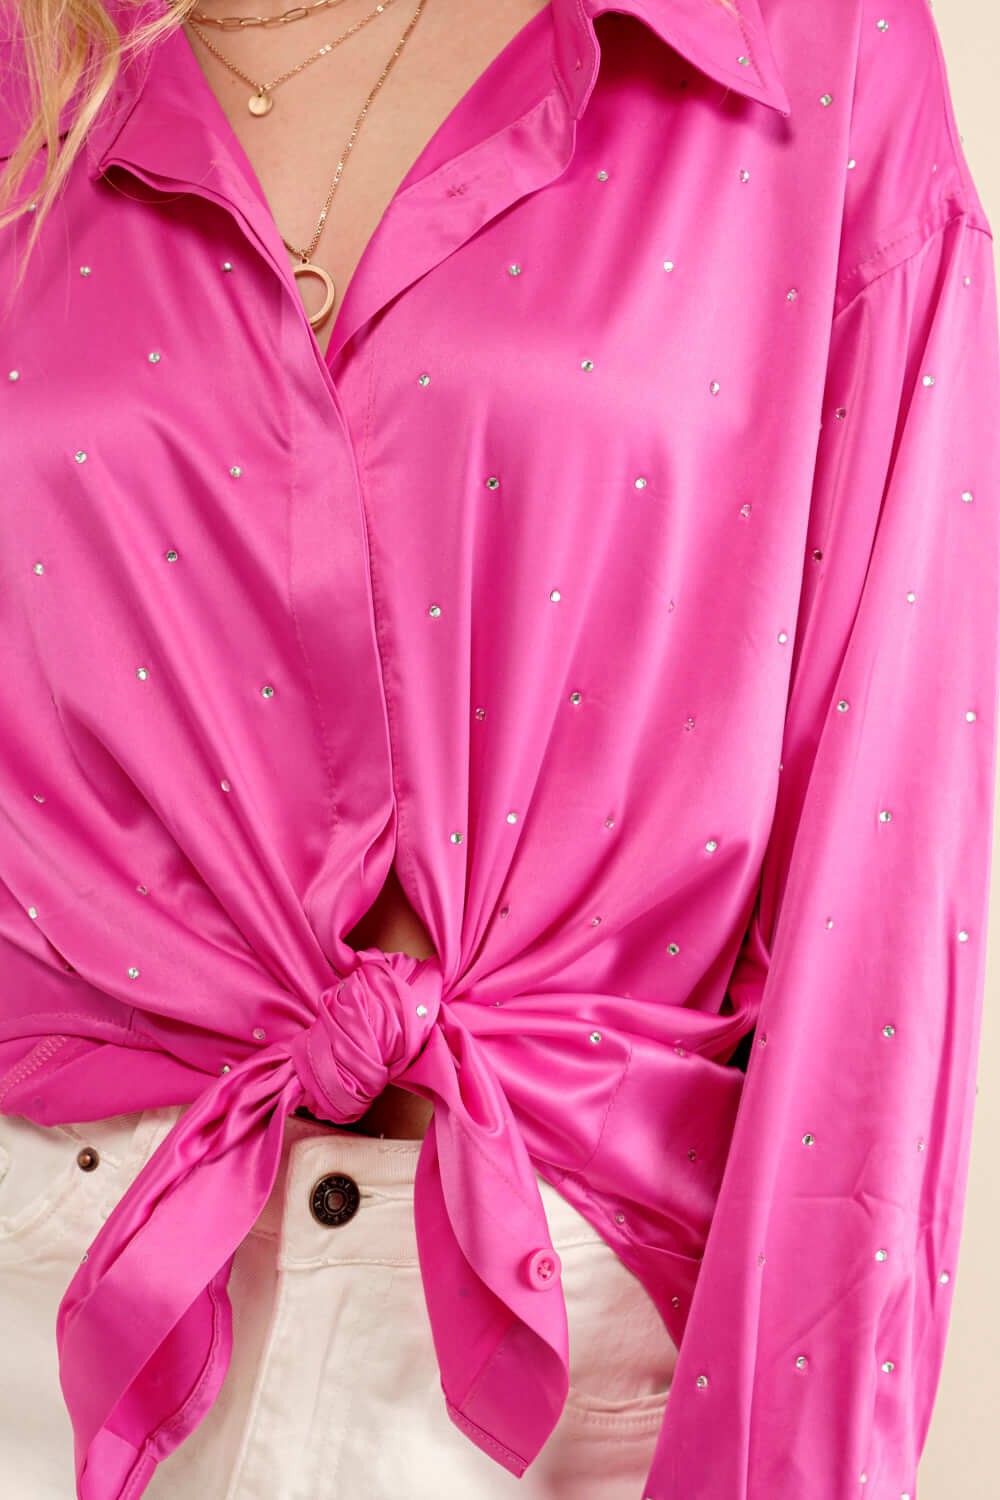 Hot Pink Satin Rhinestone Button Up Blouse